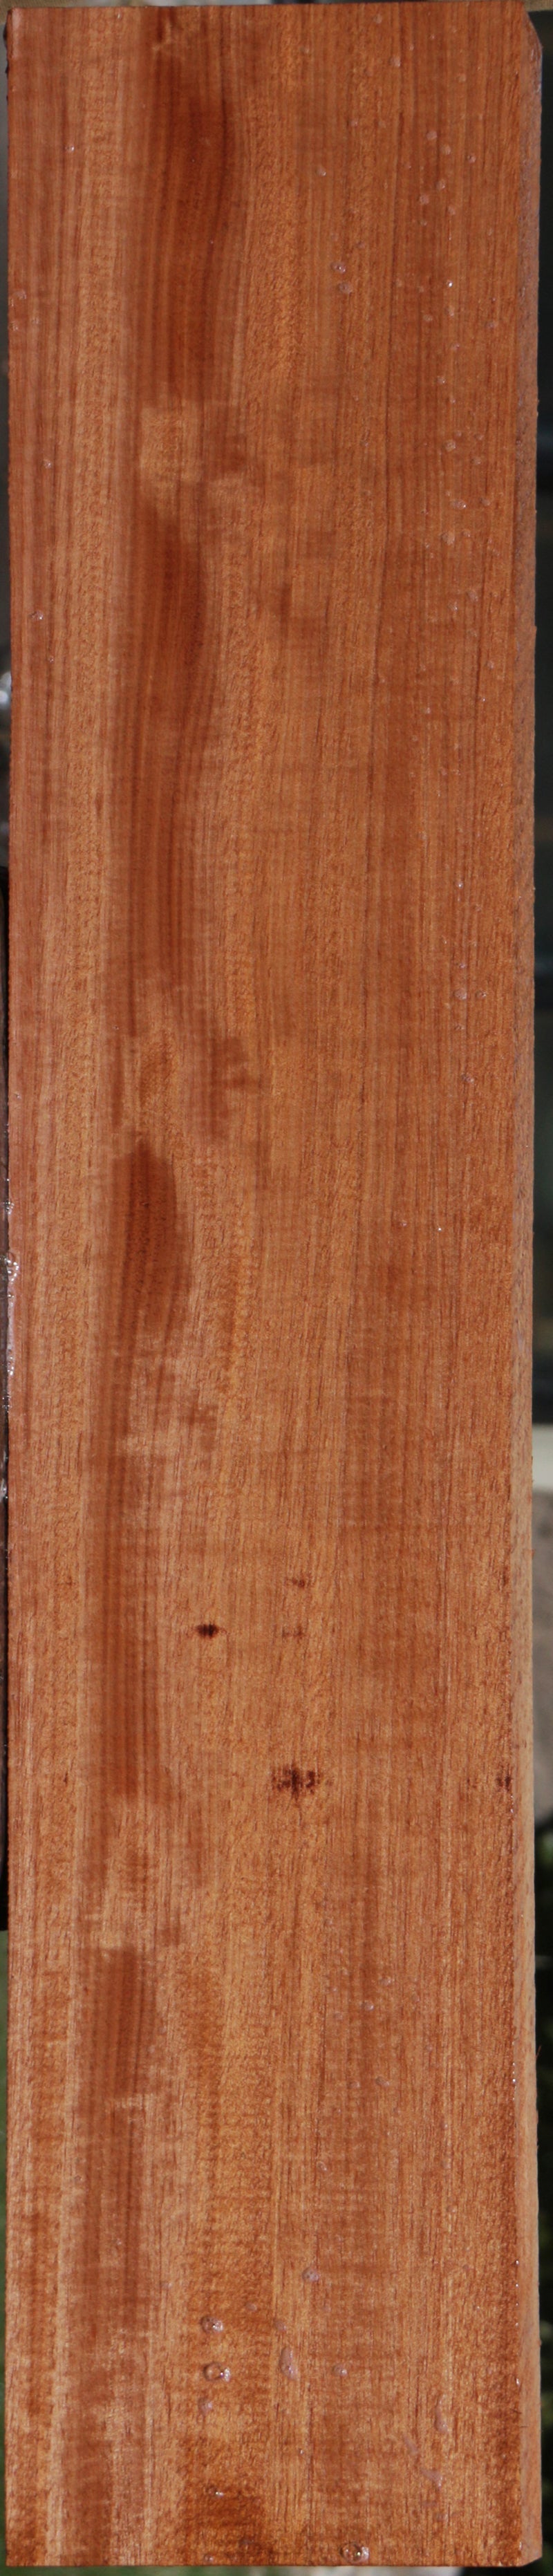 Extra Fancy Makore Lumber